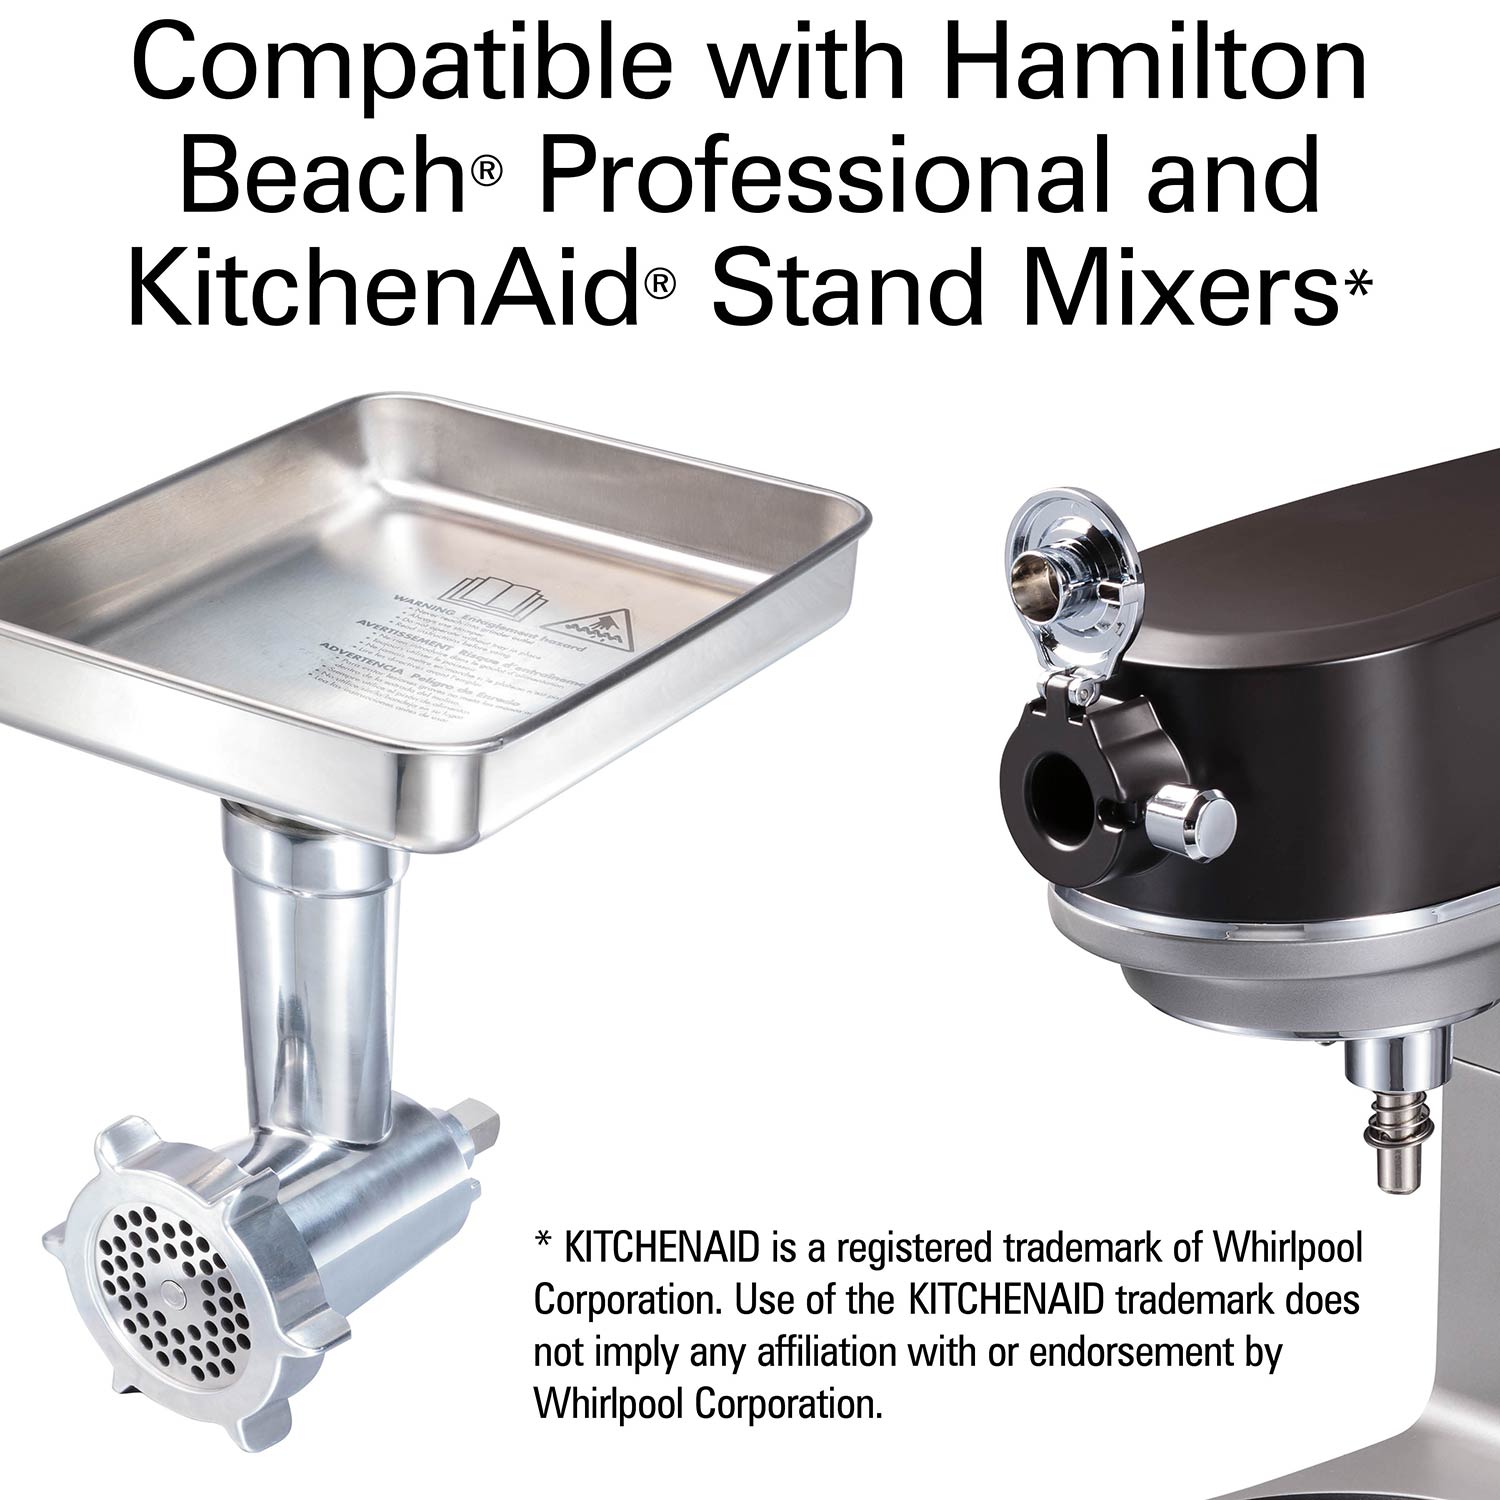 Hamilton Beach Professional Stand Mixer Specialty Attachment, All